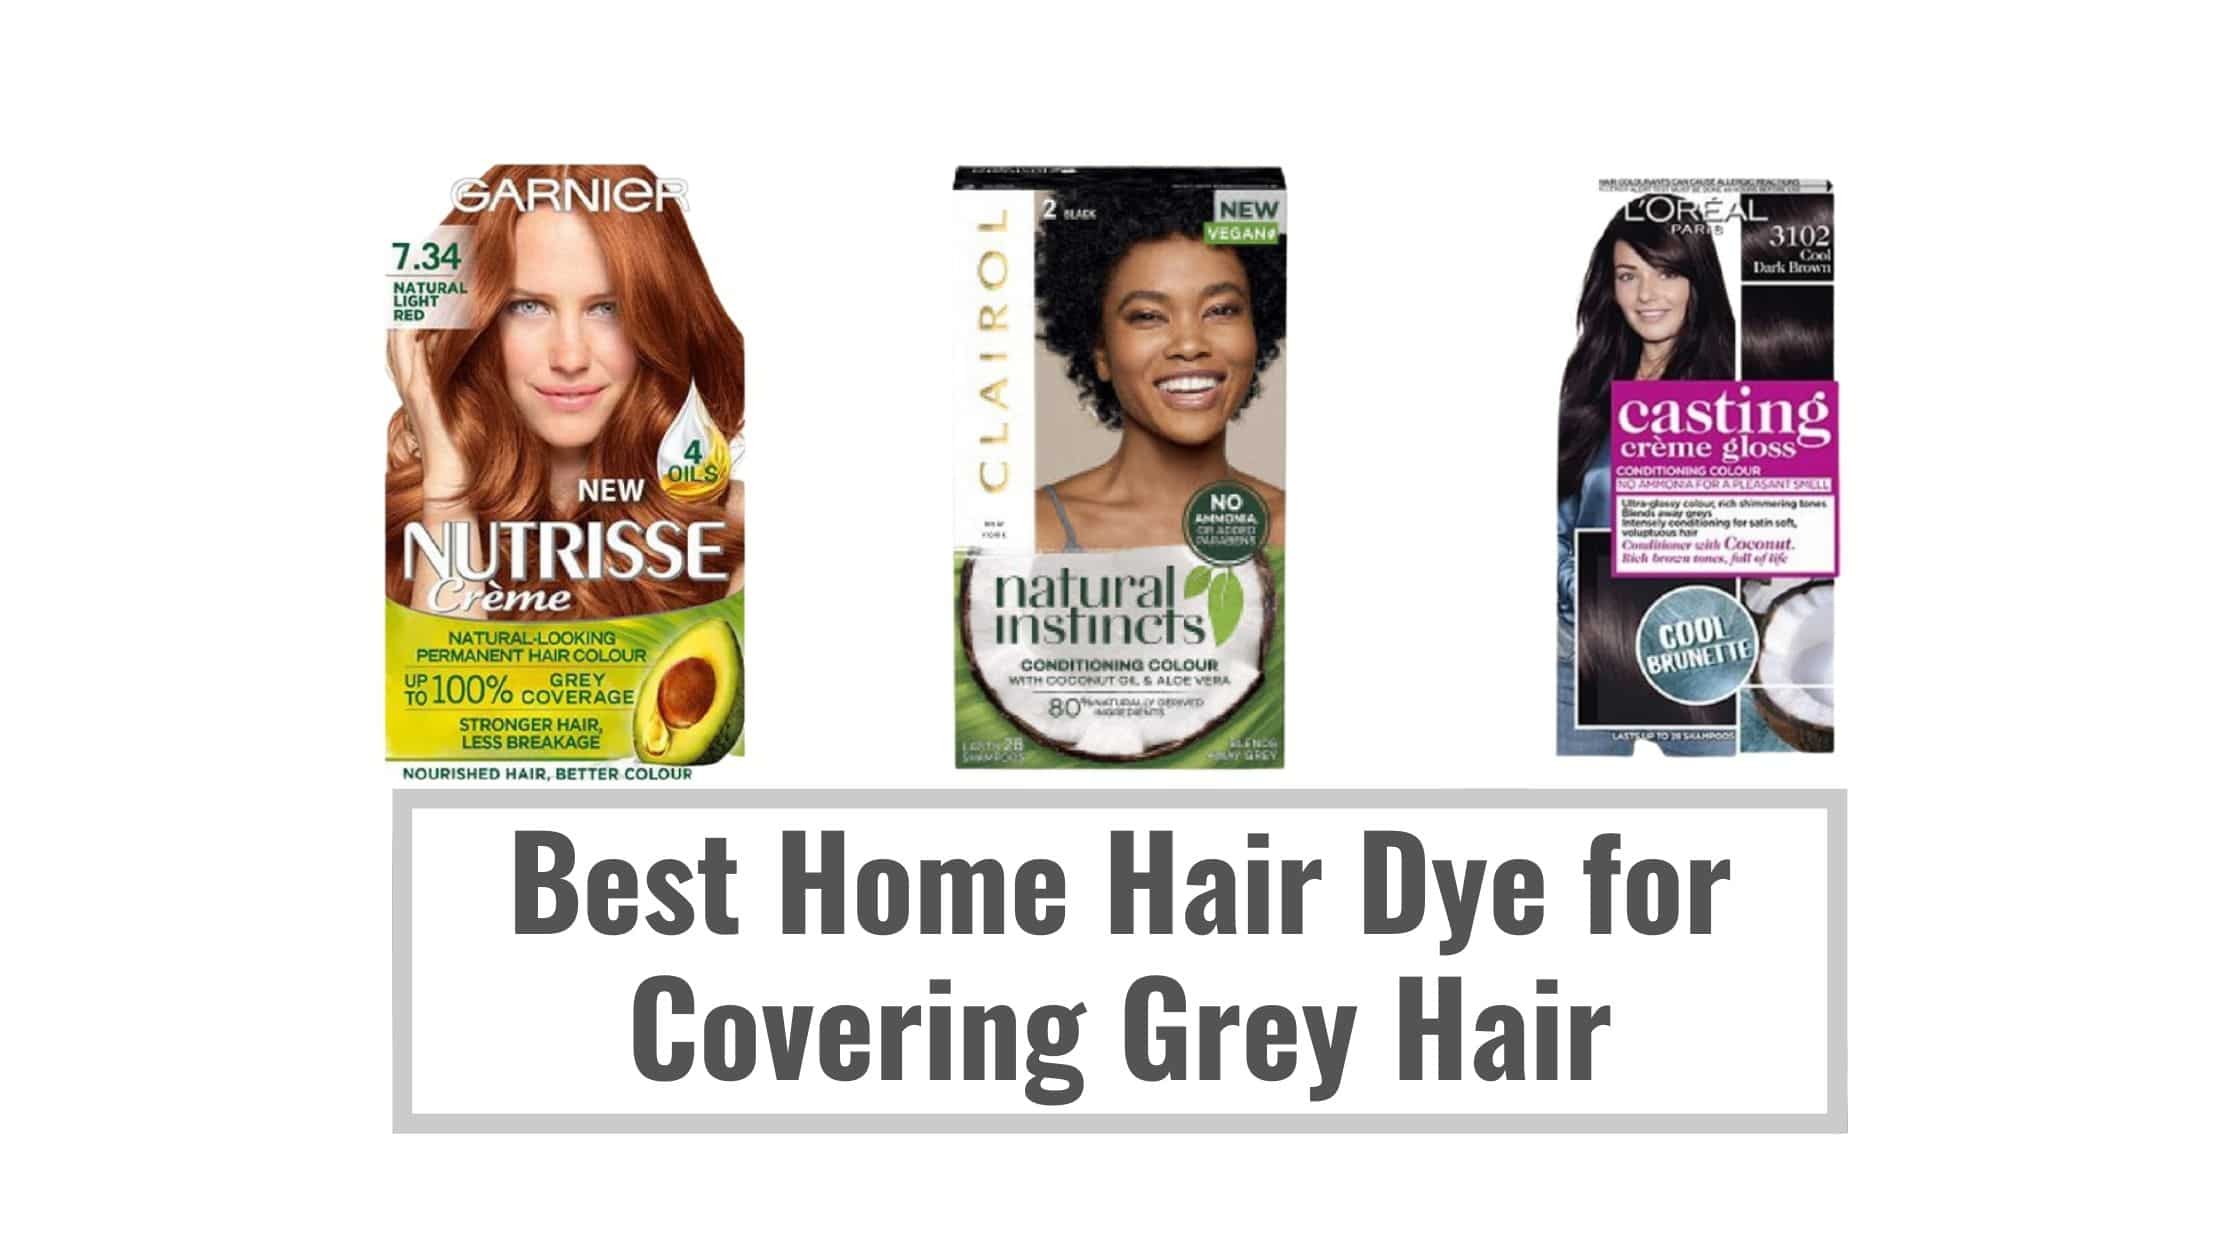 Best Home Hair Dye for Covering Grey Hair